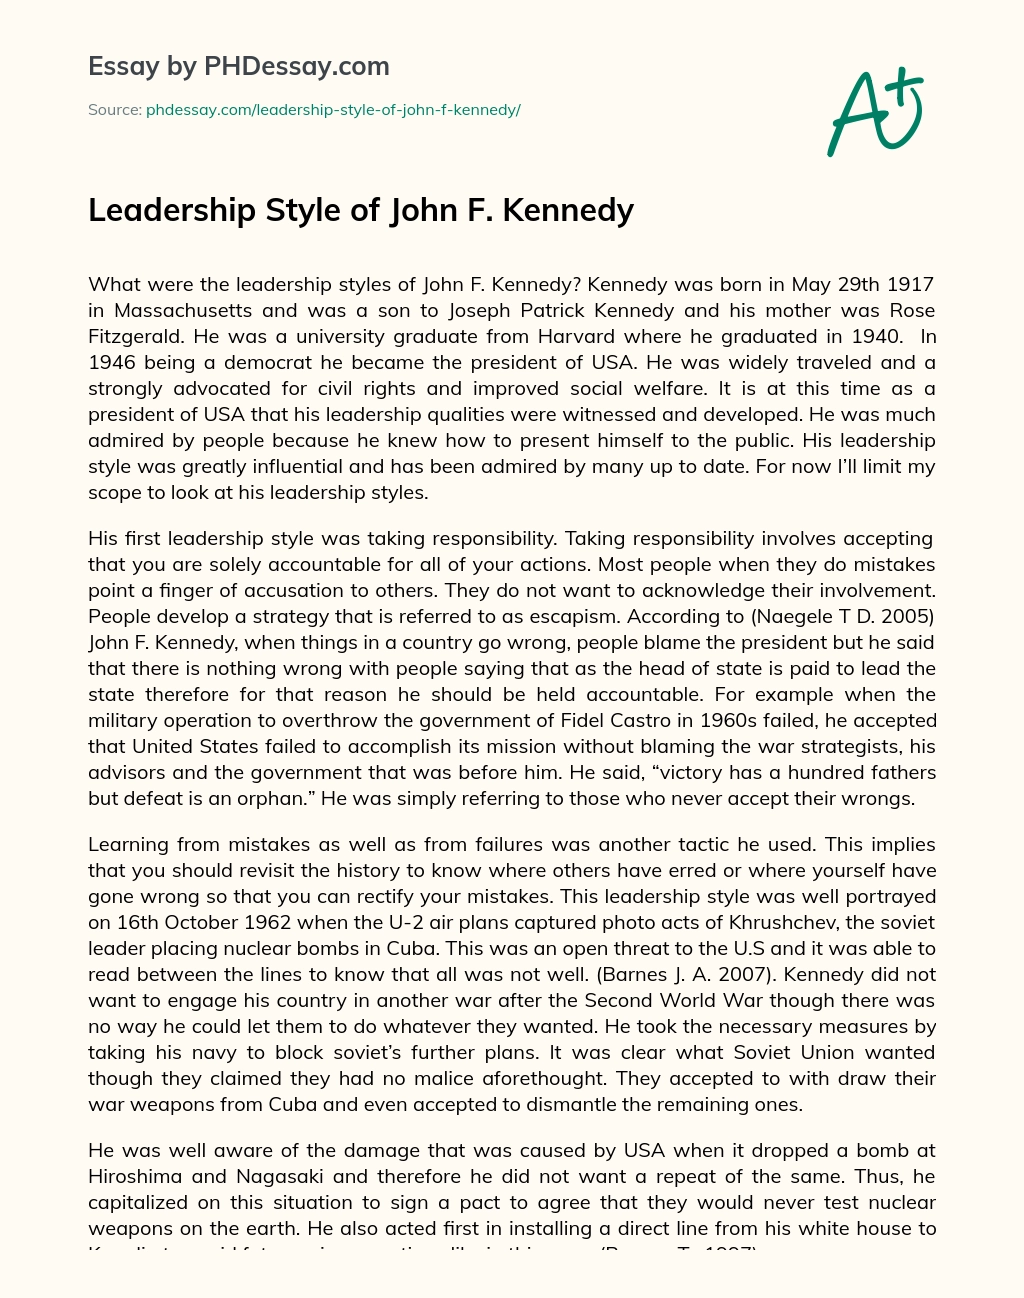 Leadership Style of John F. Kennedy essay